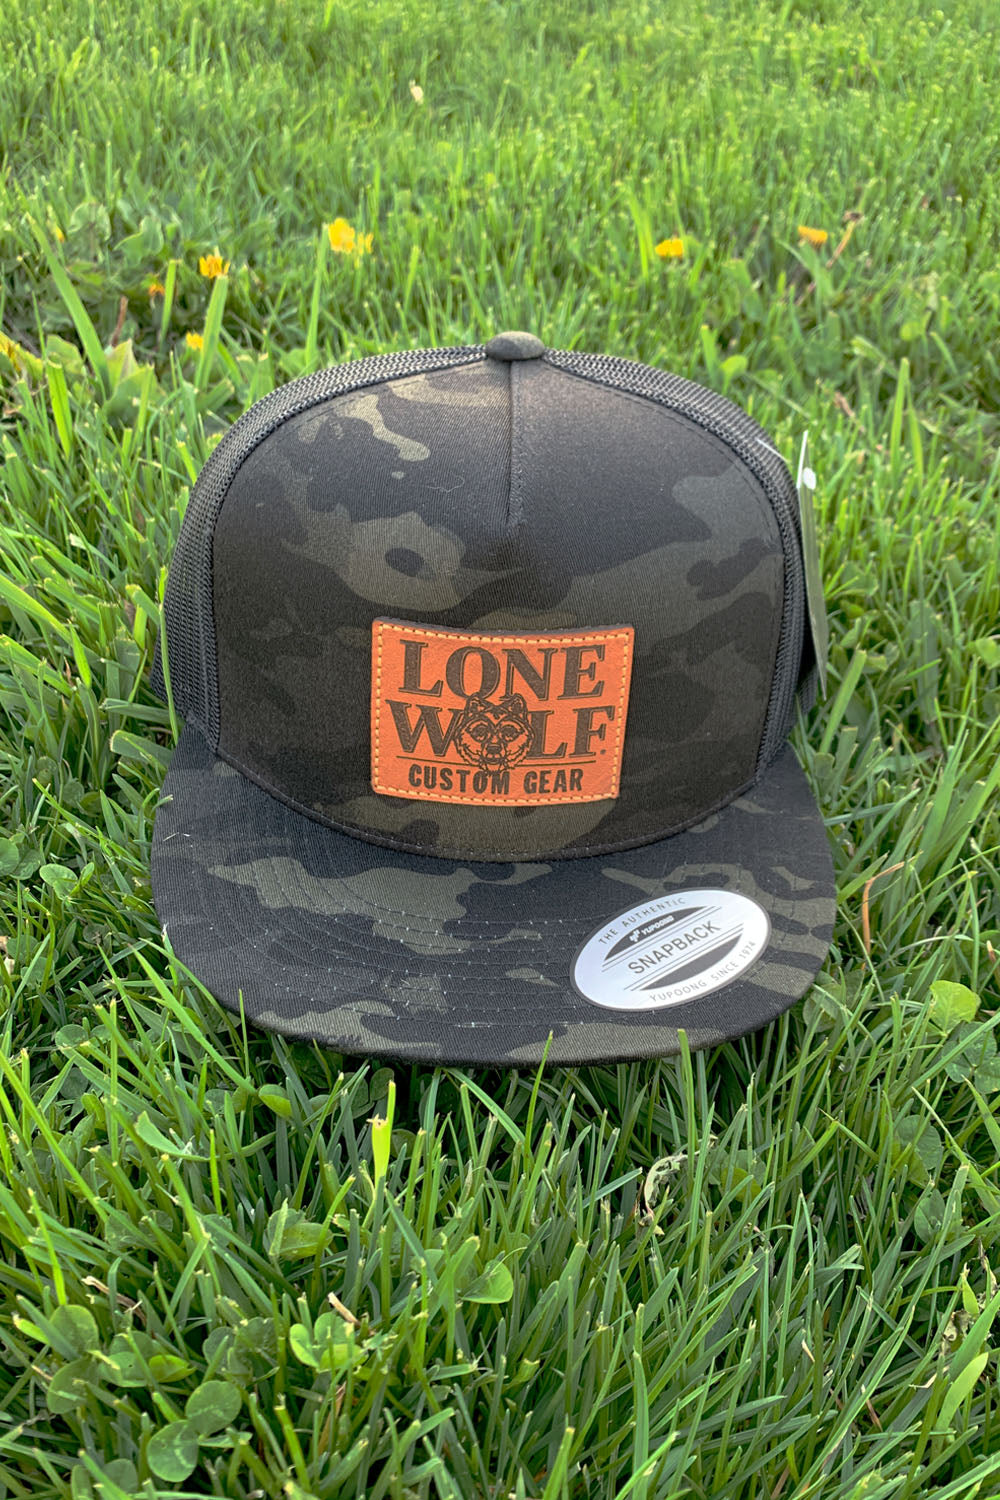 Lone Wolf Custom Gear Flat Bill Trucker Hat